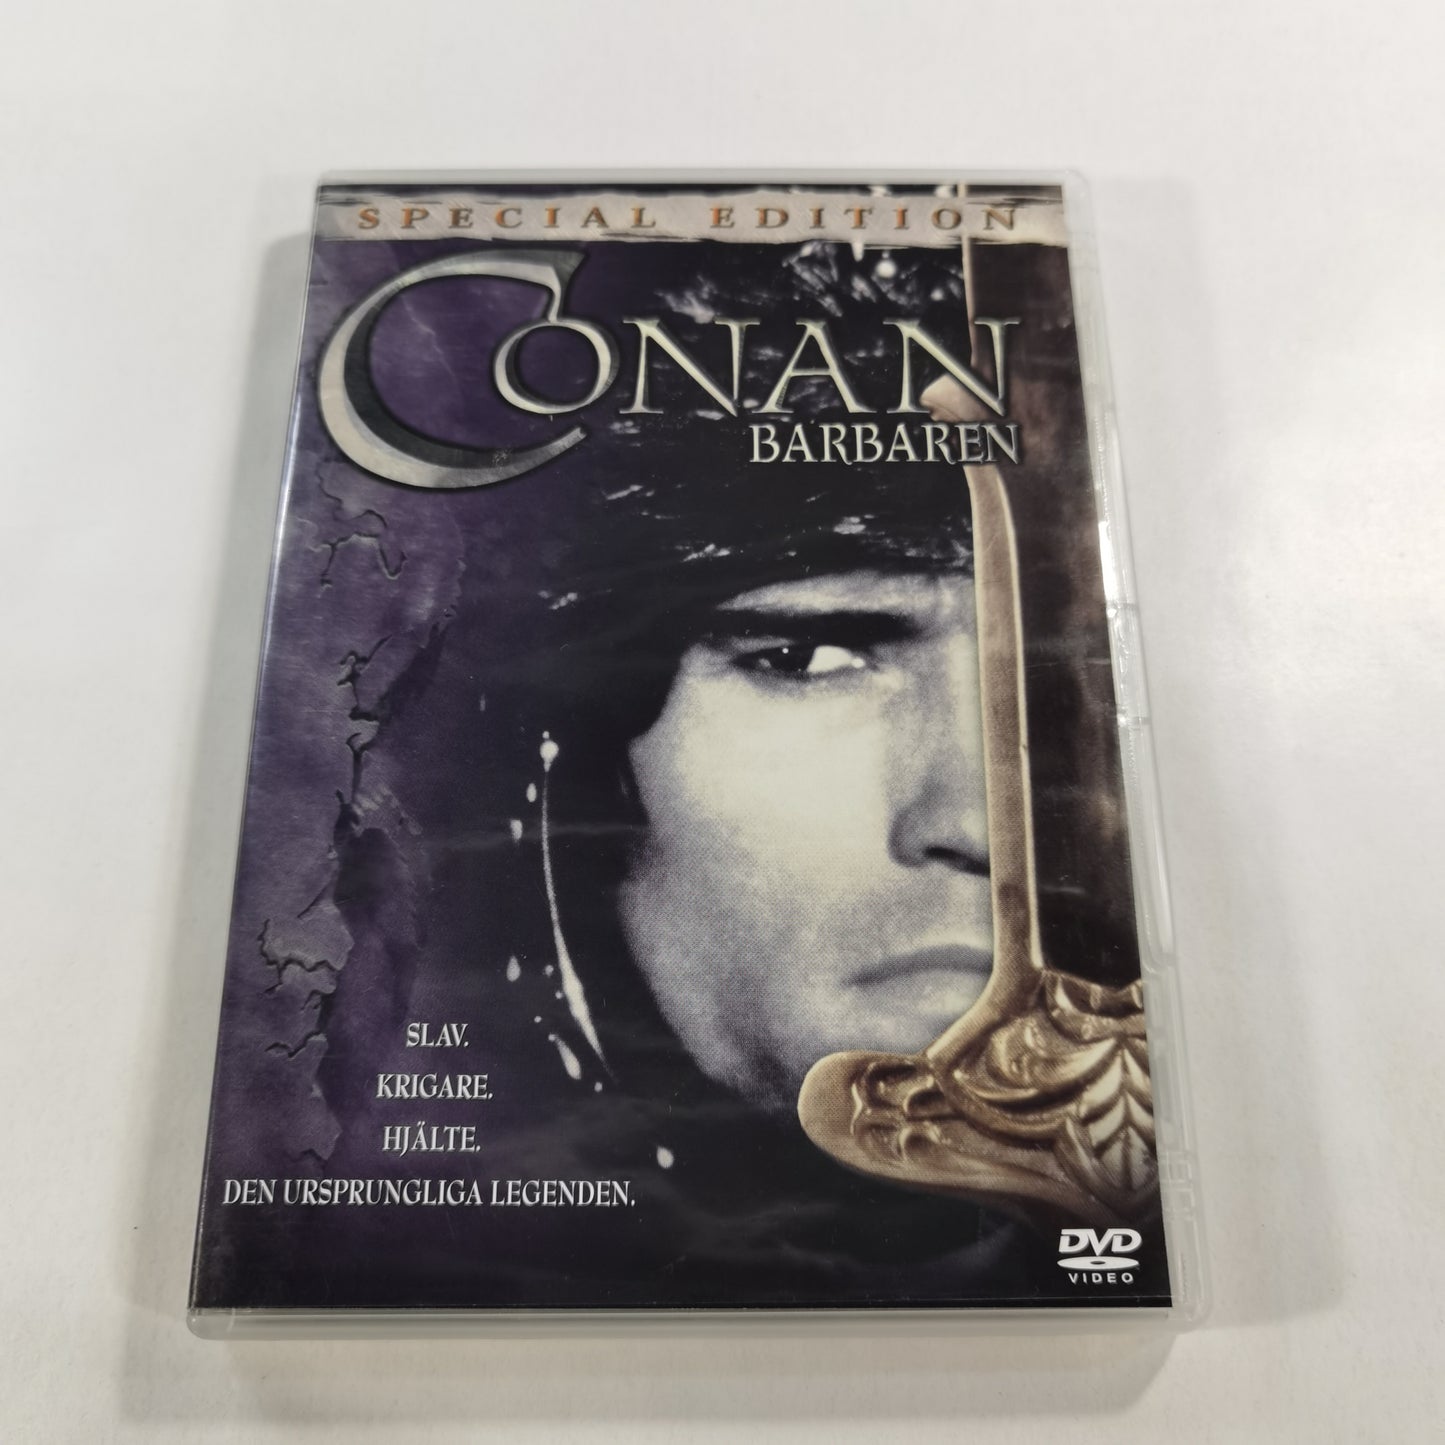 Conan the Barbarian (1982) - DVD SE 2005 Special Edition